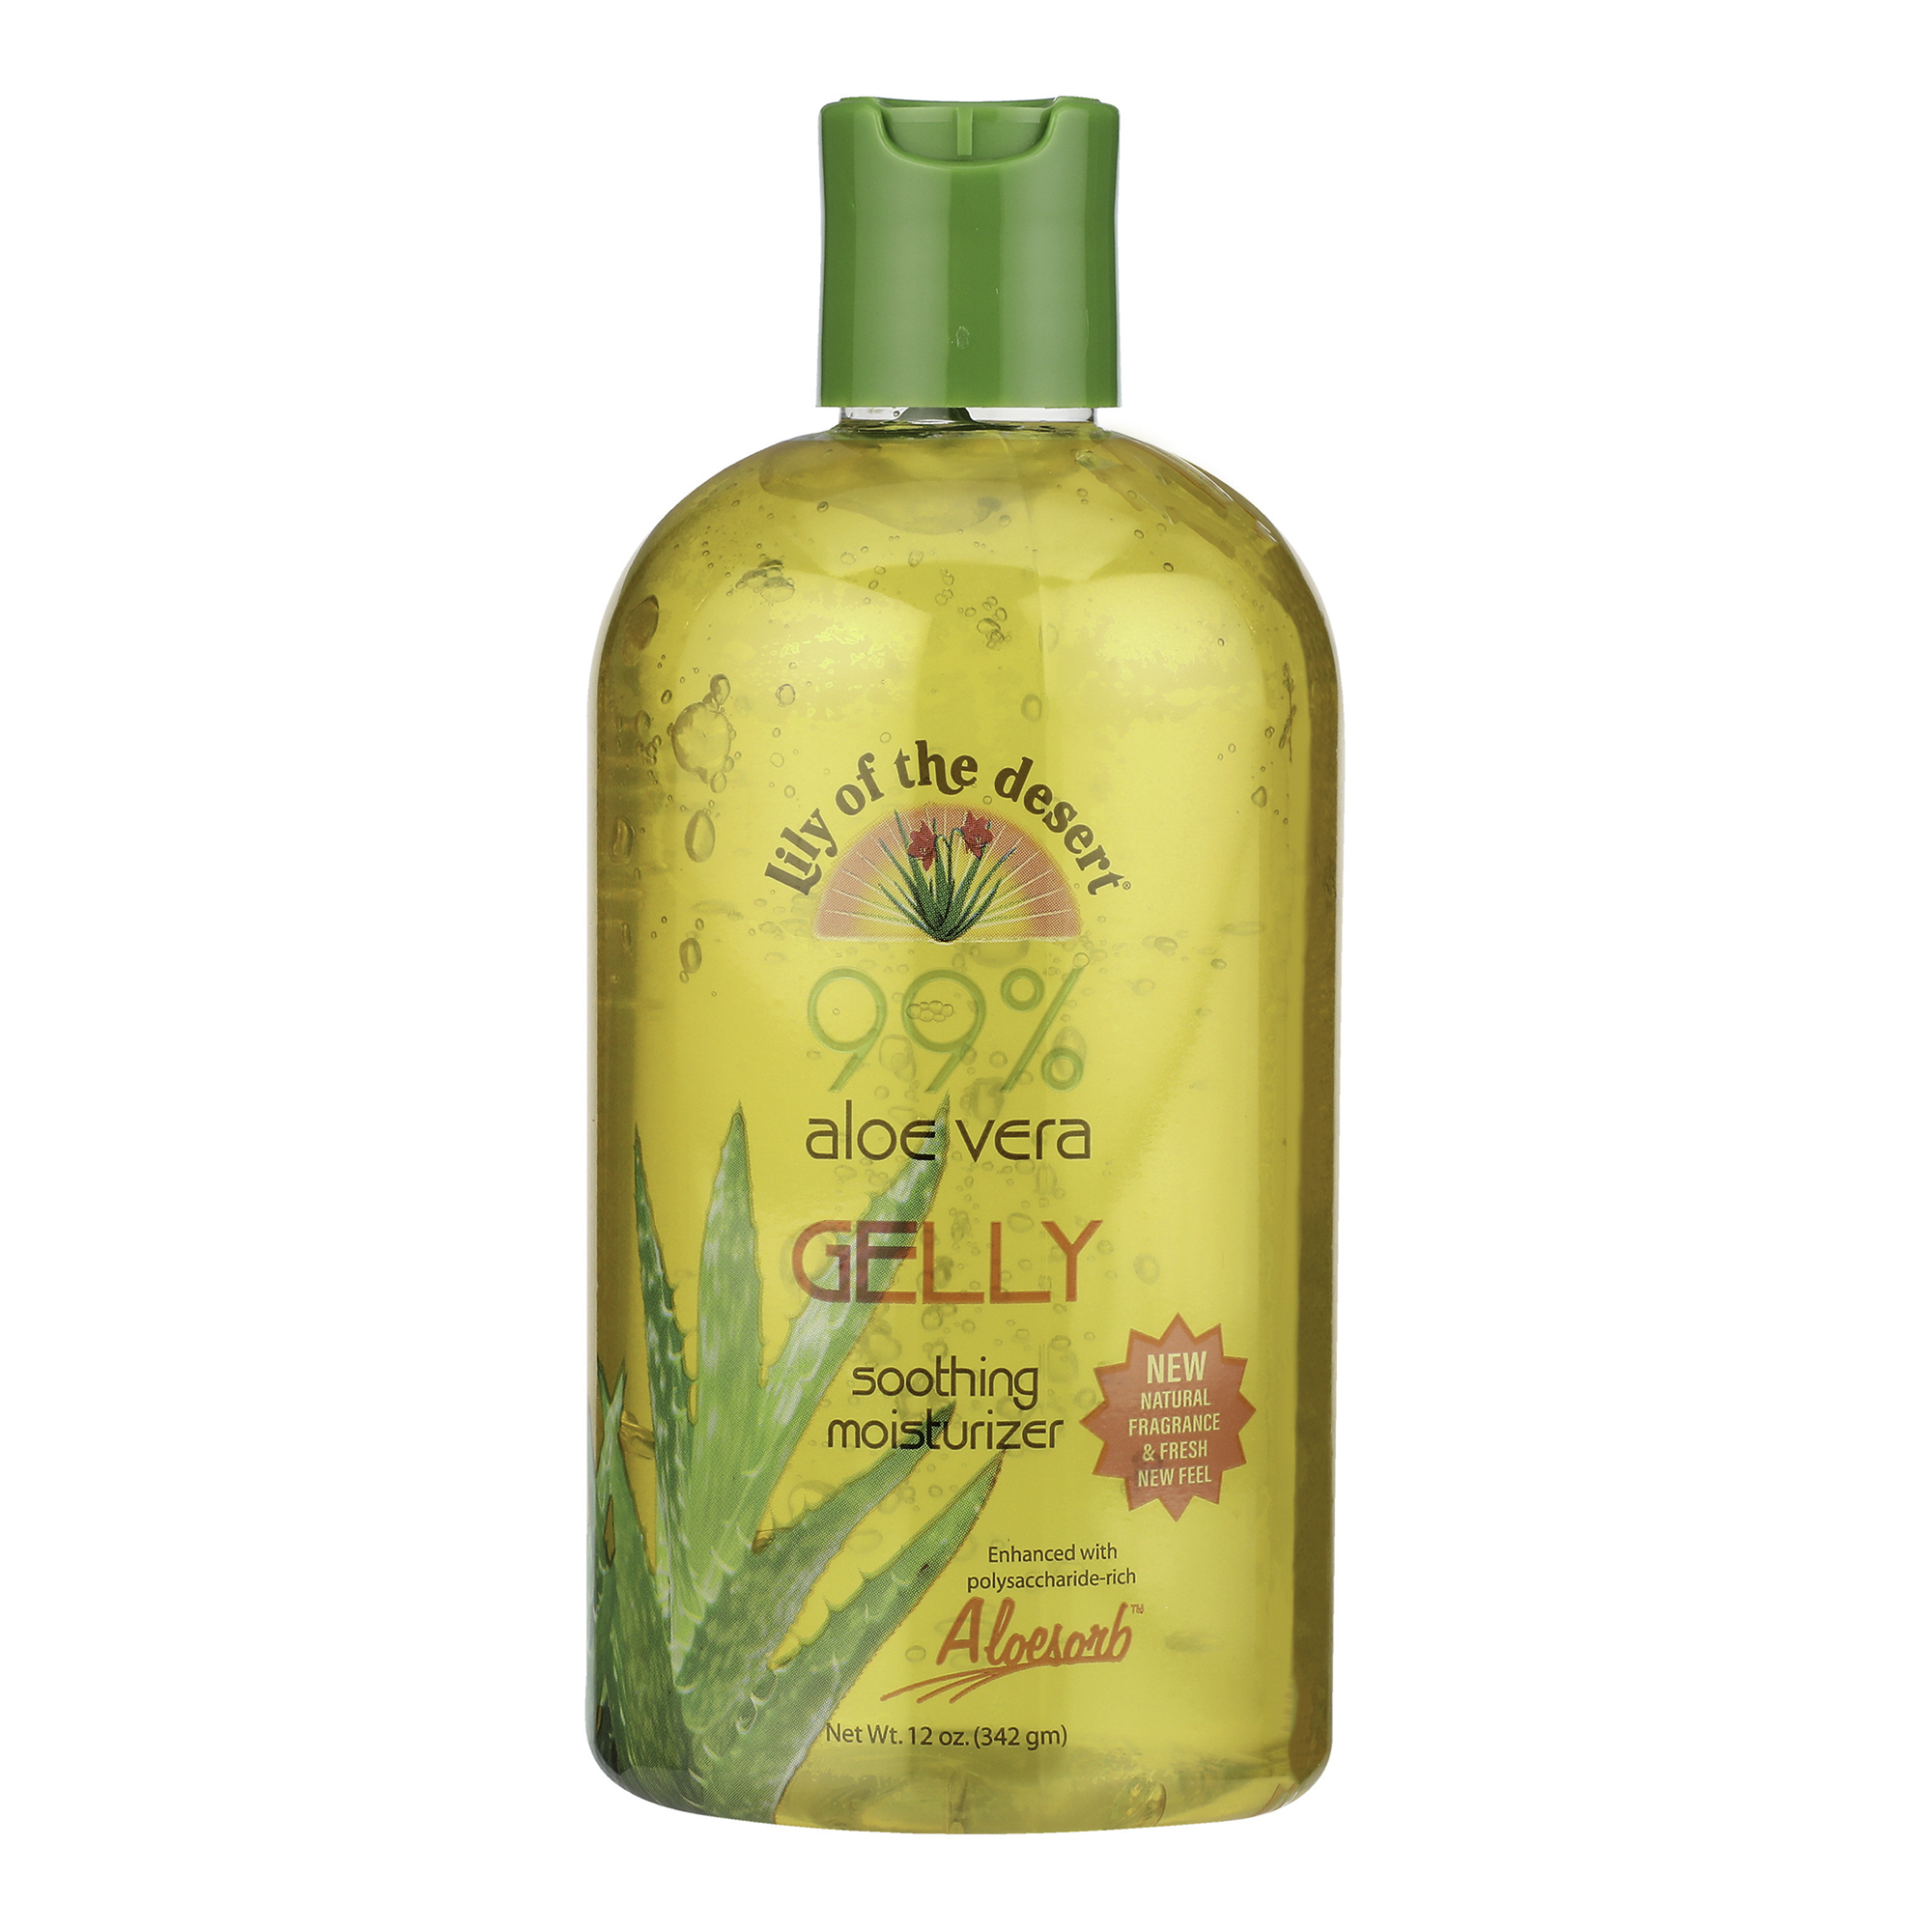 PURA D'OR Organic Aloe Vera Gel (16oz) with Lavender - All Natural  Moisturizer for Skin & Hair - Sunburn, Eczema Relief